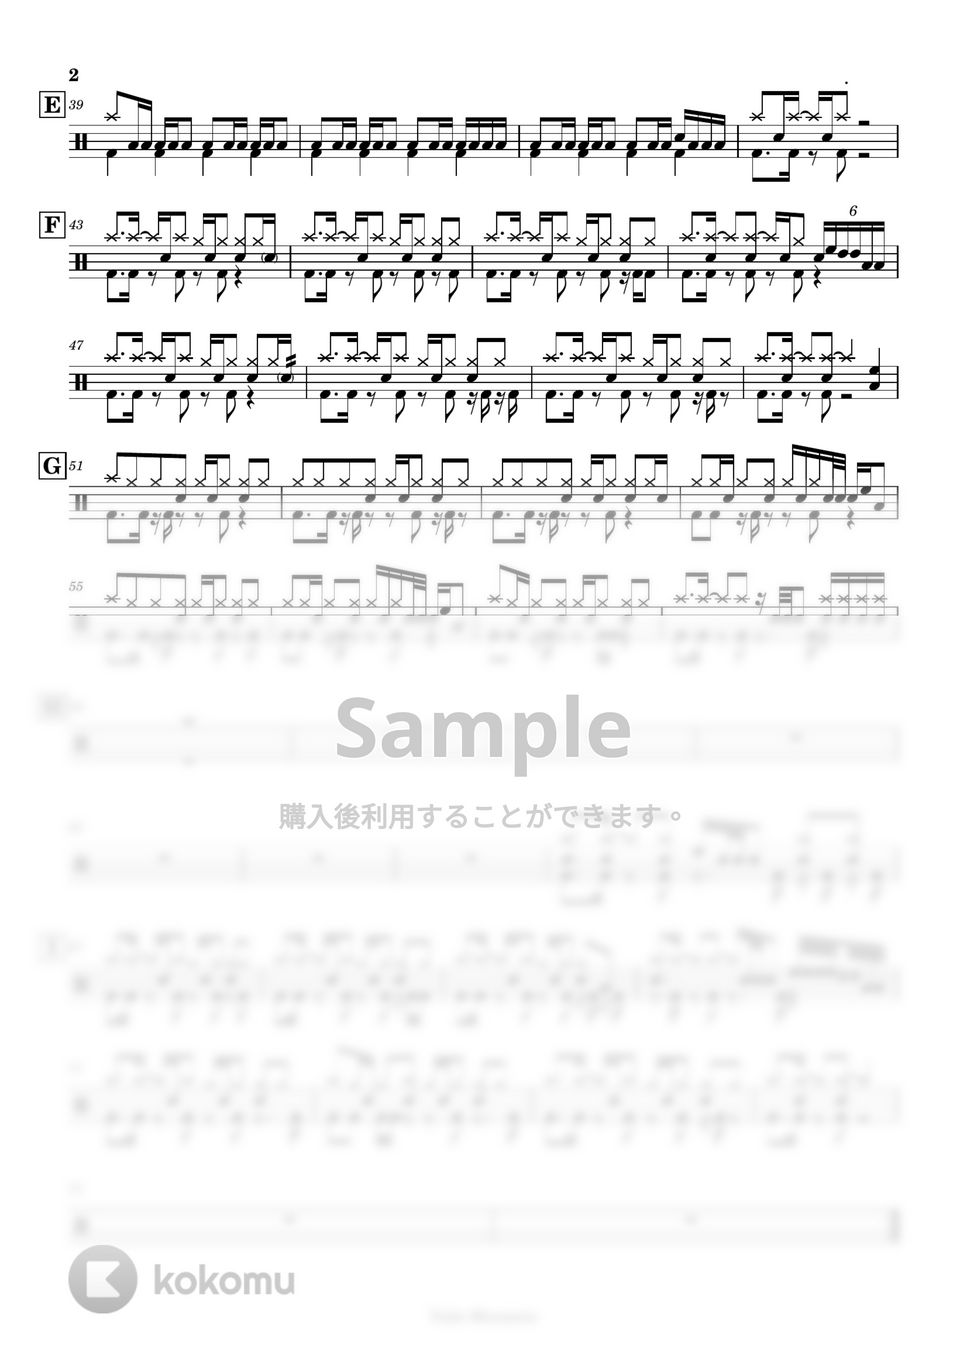 milet - 【ドラム譜】Anytime Anywhere【完コピ】 by Taiki Mizumoto